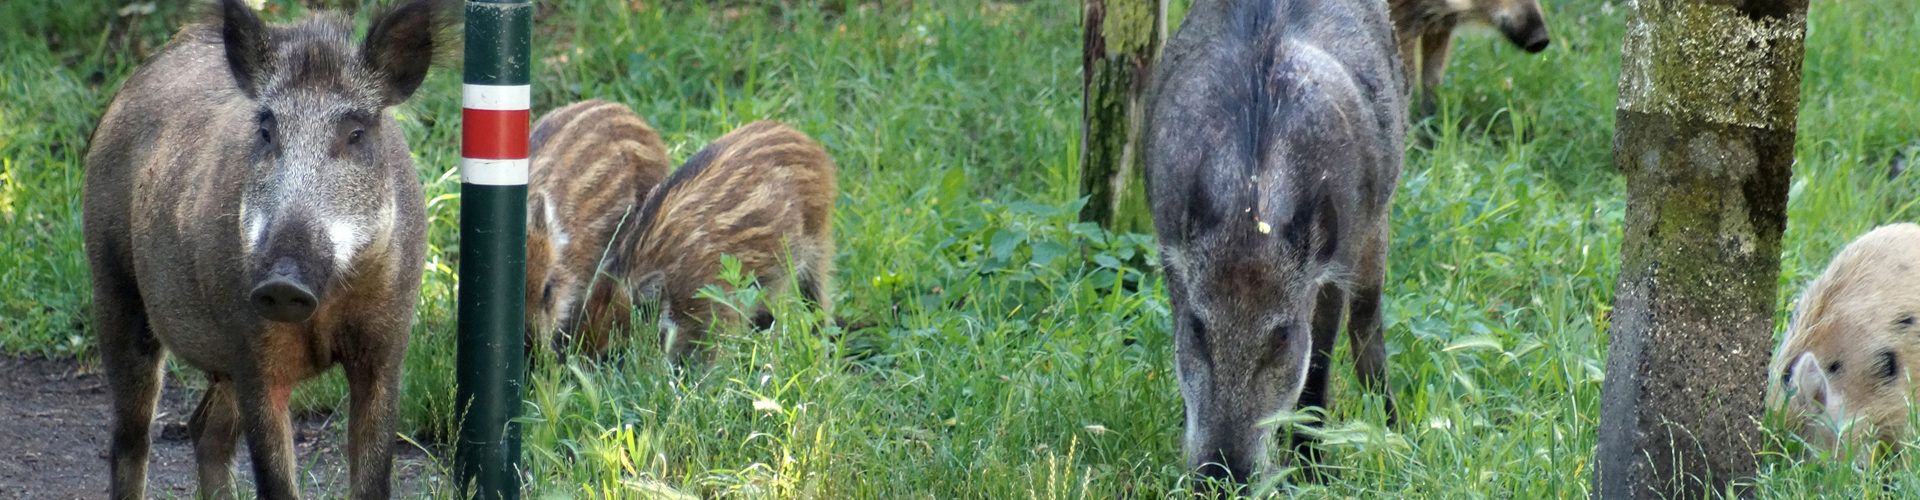 Wildschweine in Berlin